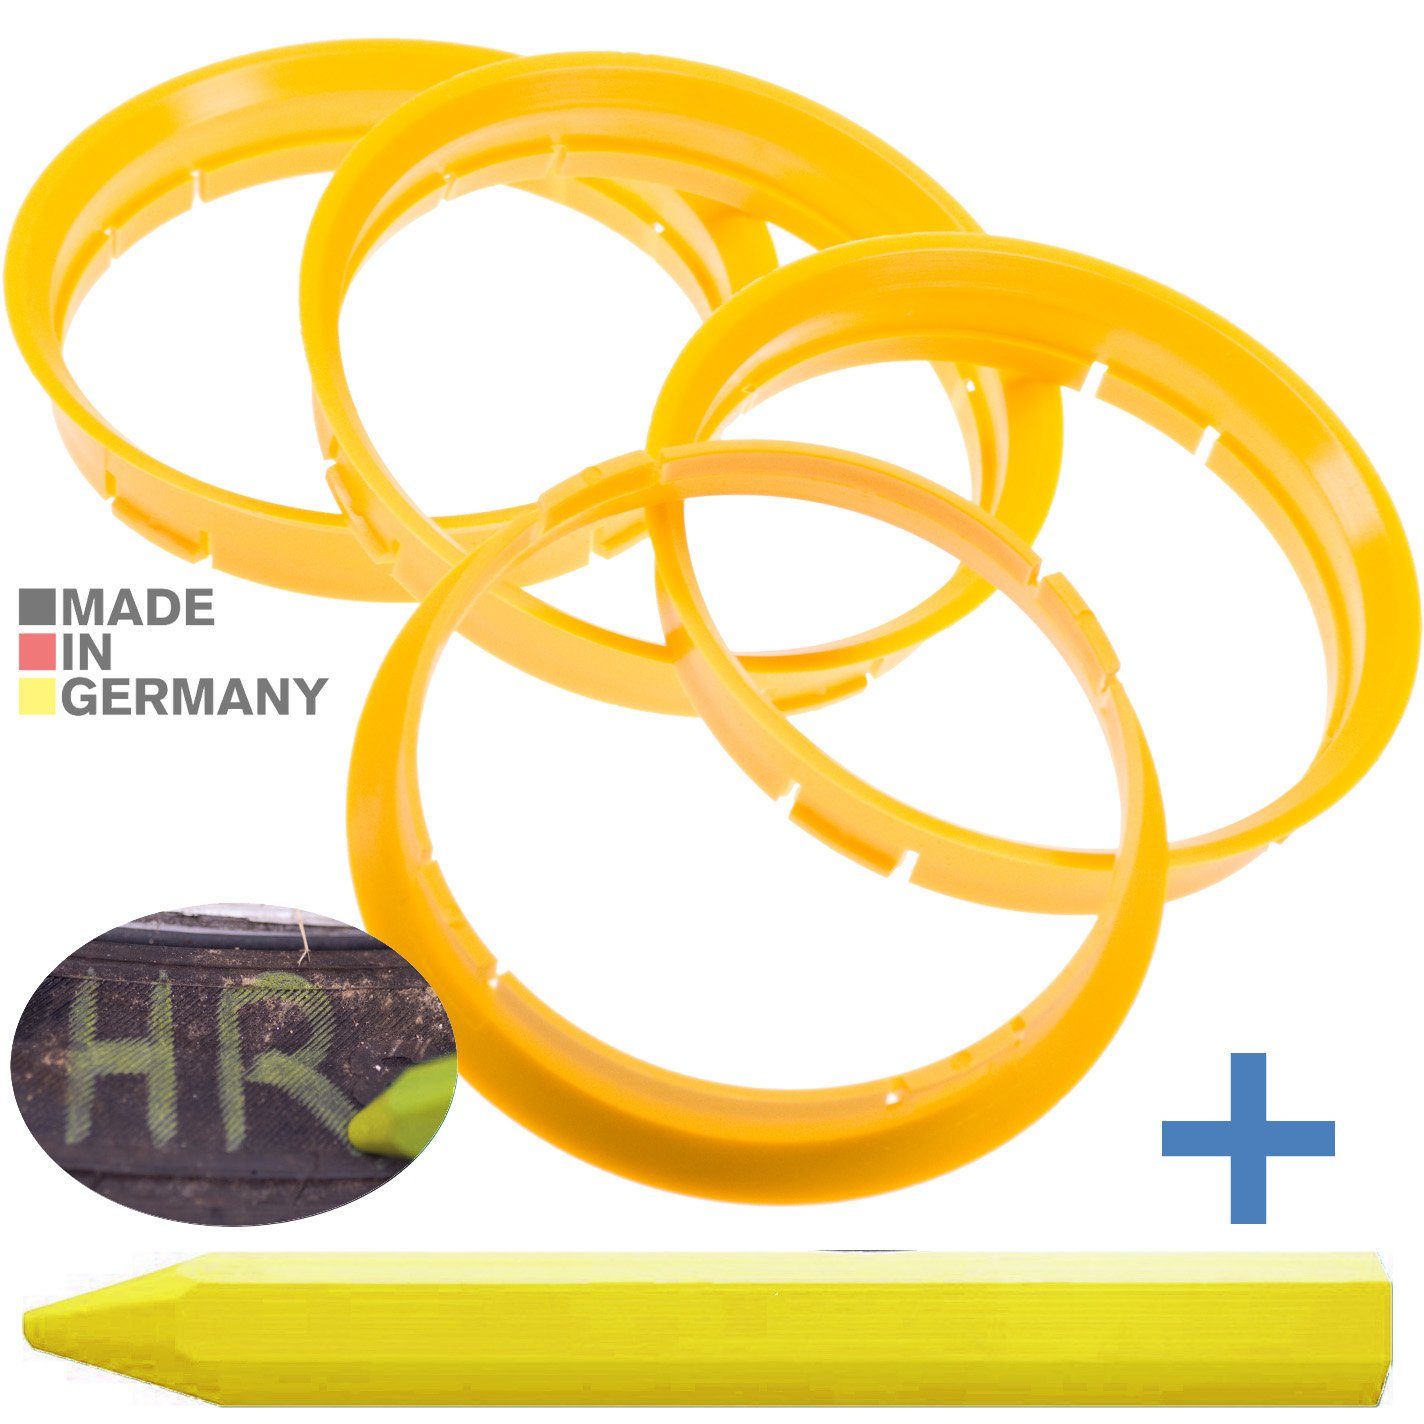 RKC Reifenstift 4X Zentrierringe Gelb Felgen Ringe + 1x Reifen Kreide Fett Stift, Maße: 72,5 x 71,6 mm